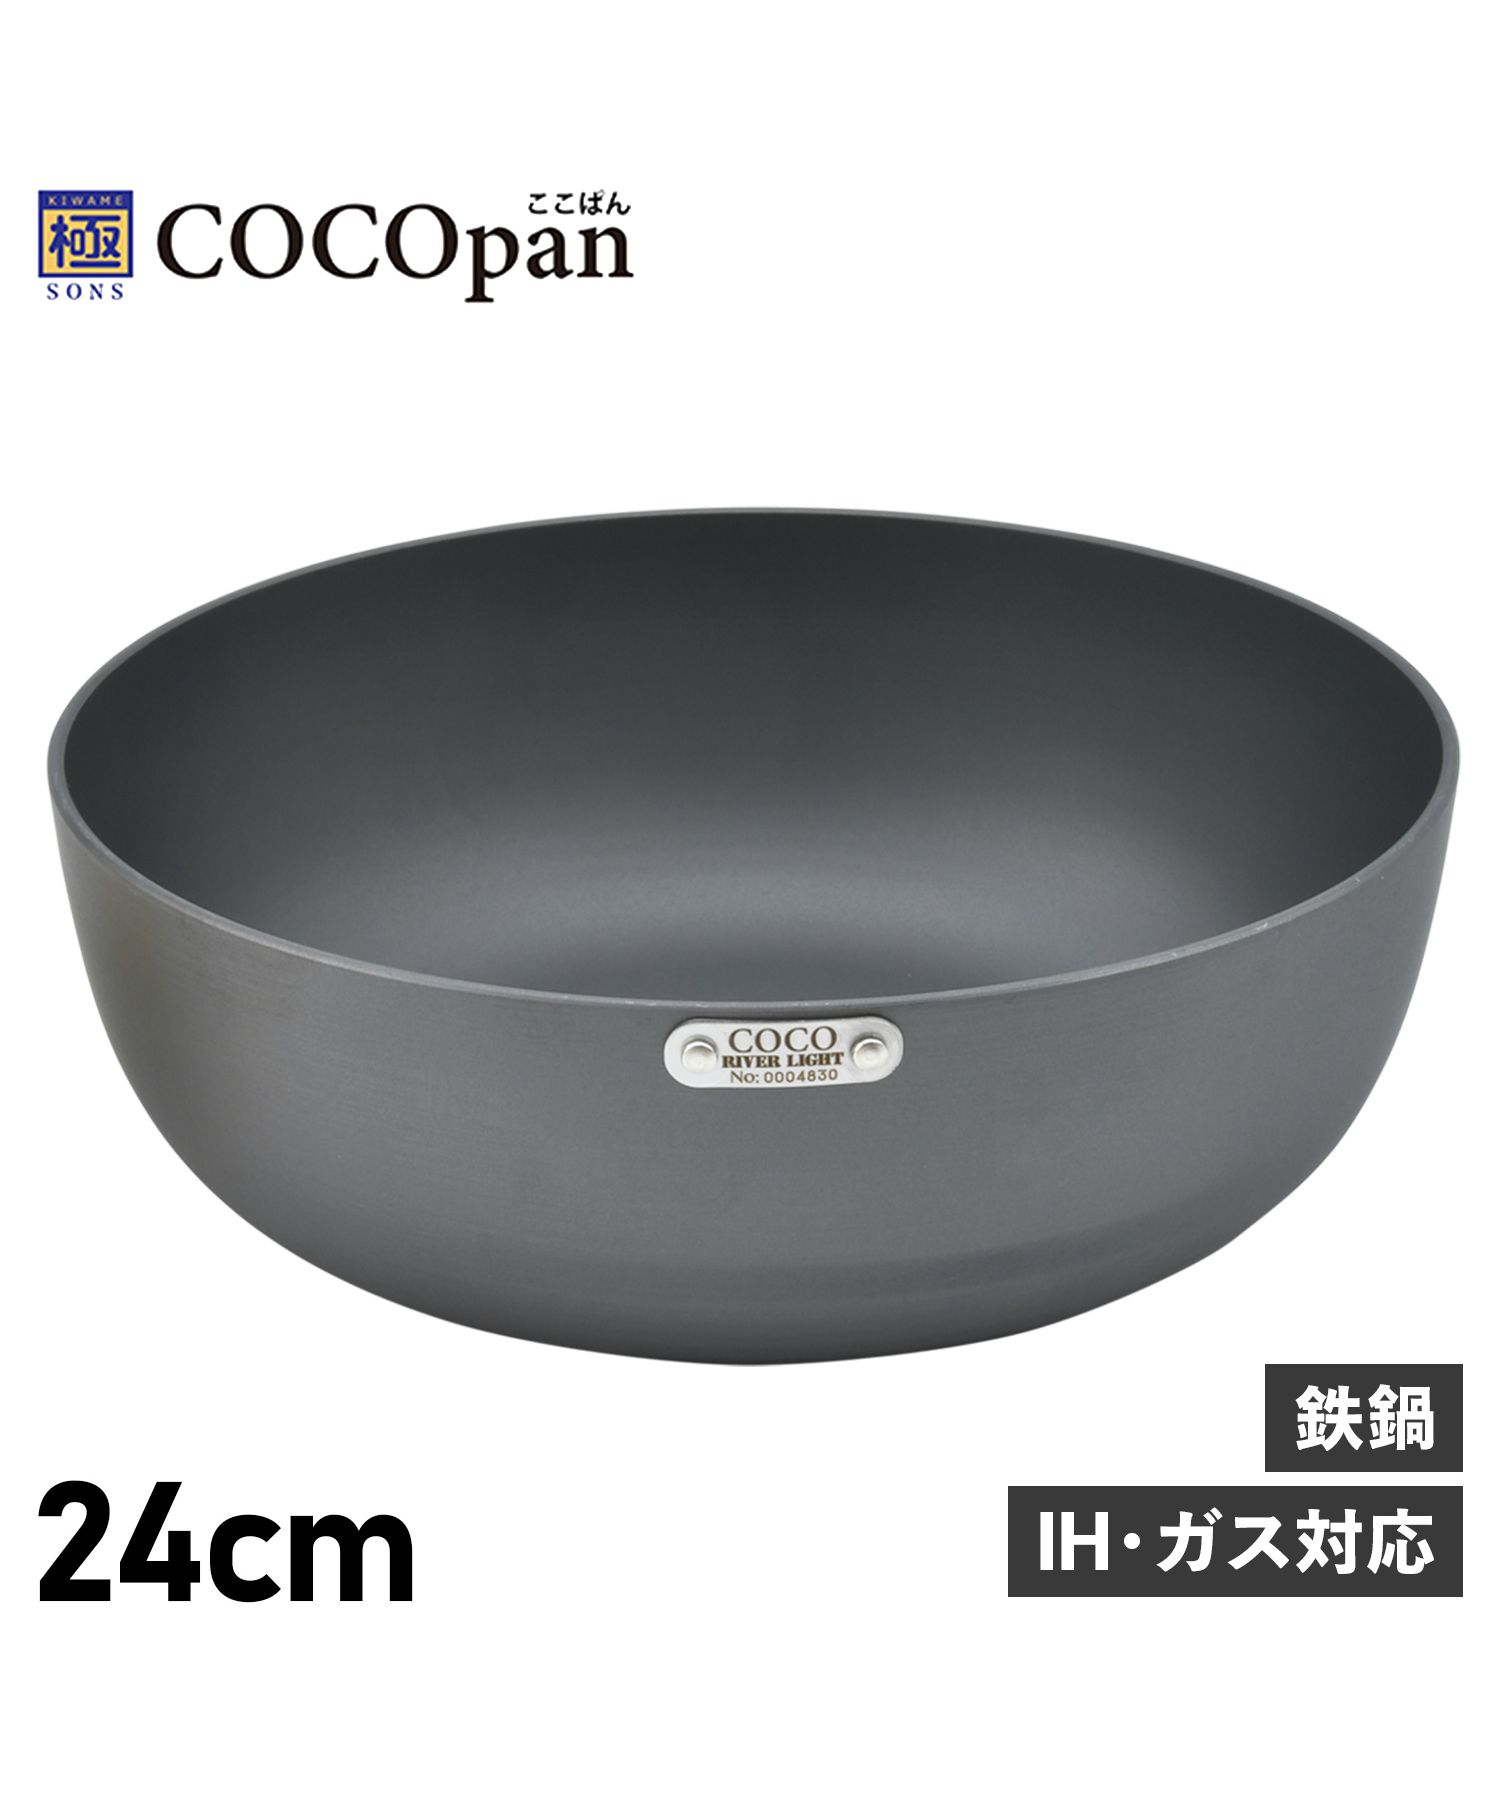 COCOpan ココパン 鉄鍋 24cm 深型 IH ガス対応 鉄 リバーライト 極SONS 